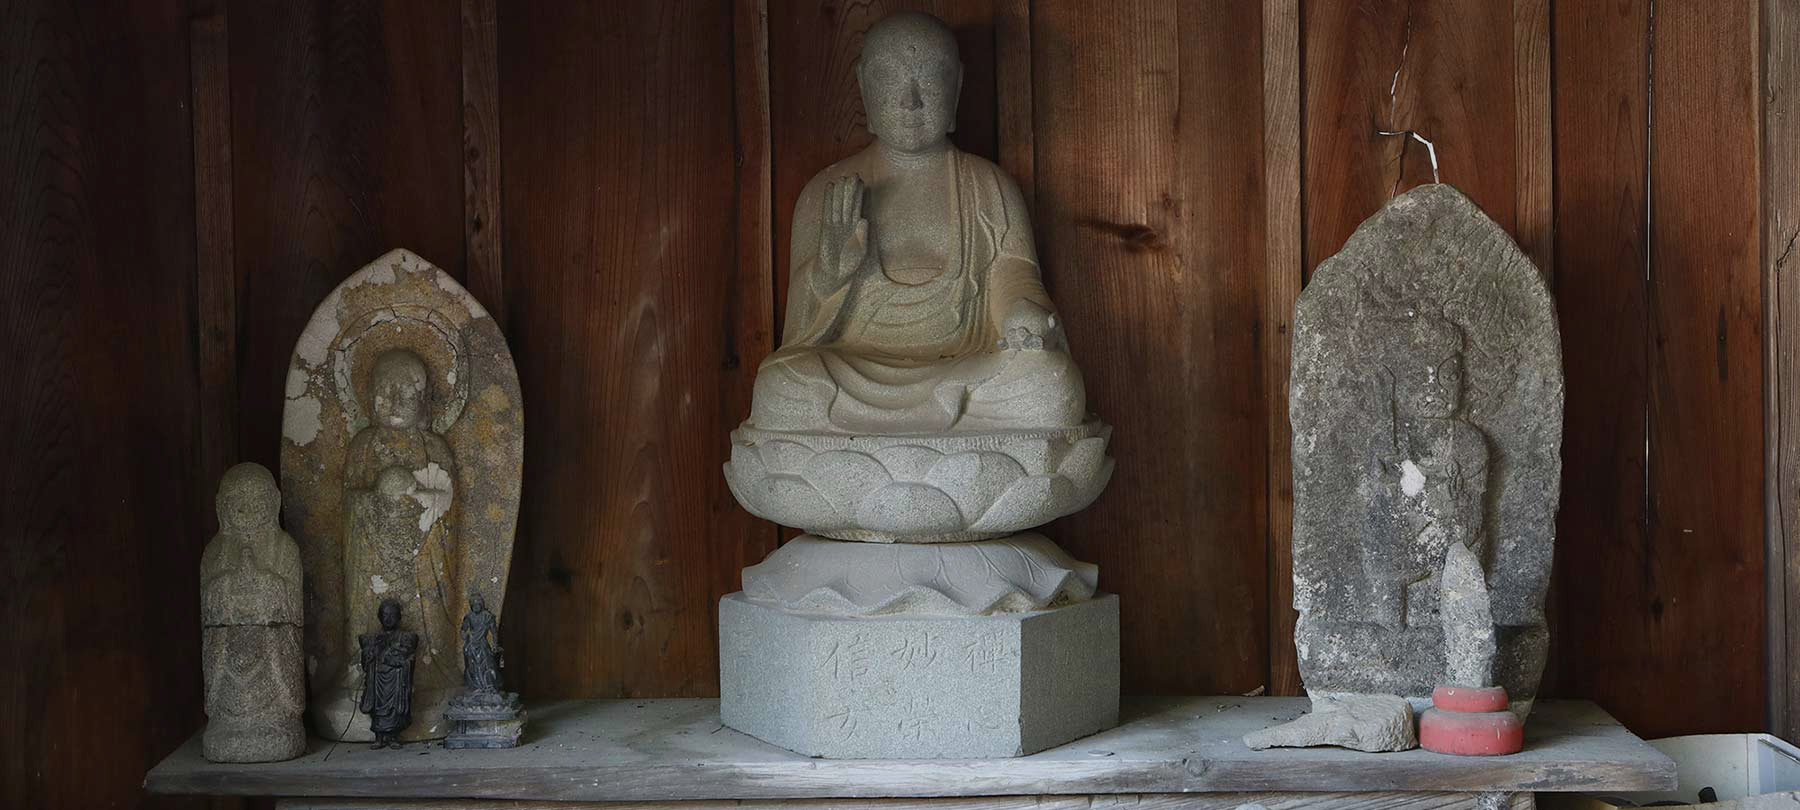 Sadaji's Stone Buddha